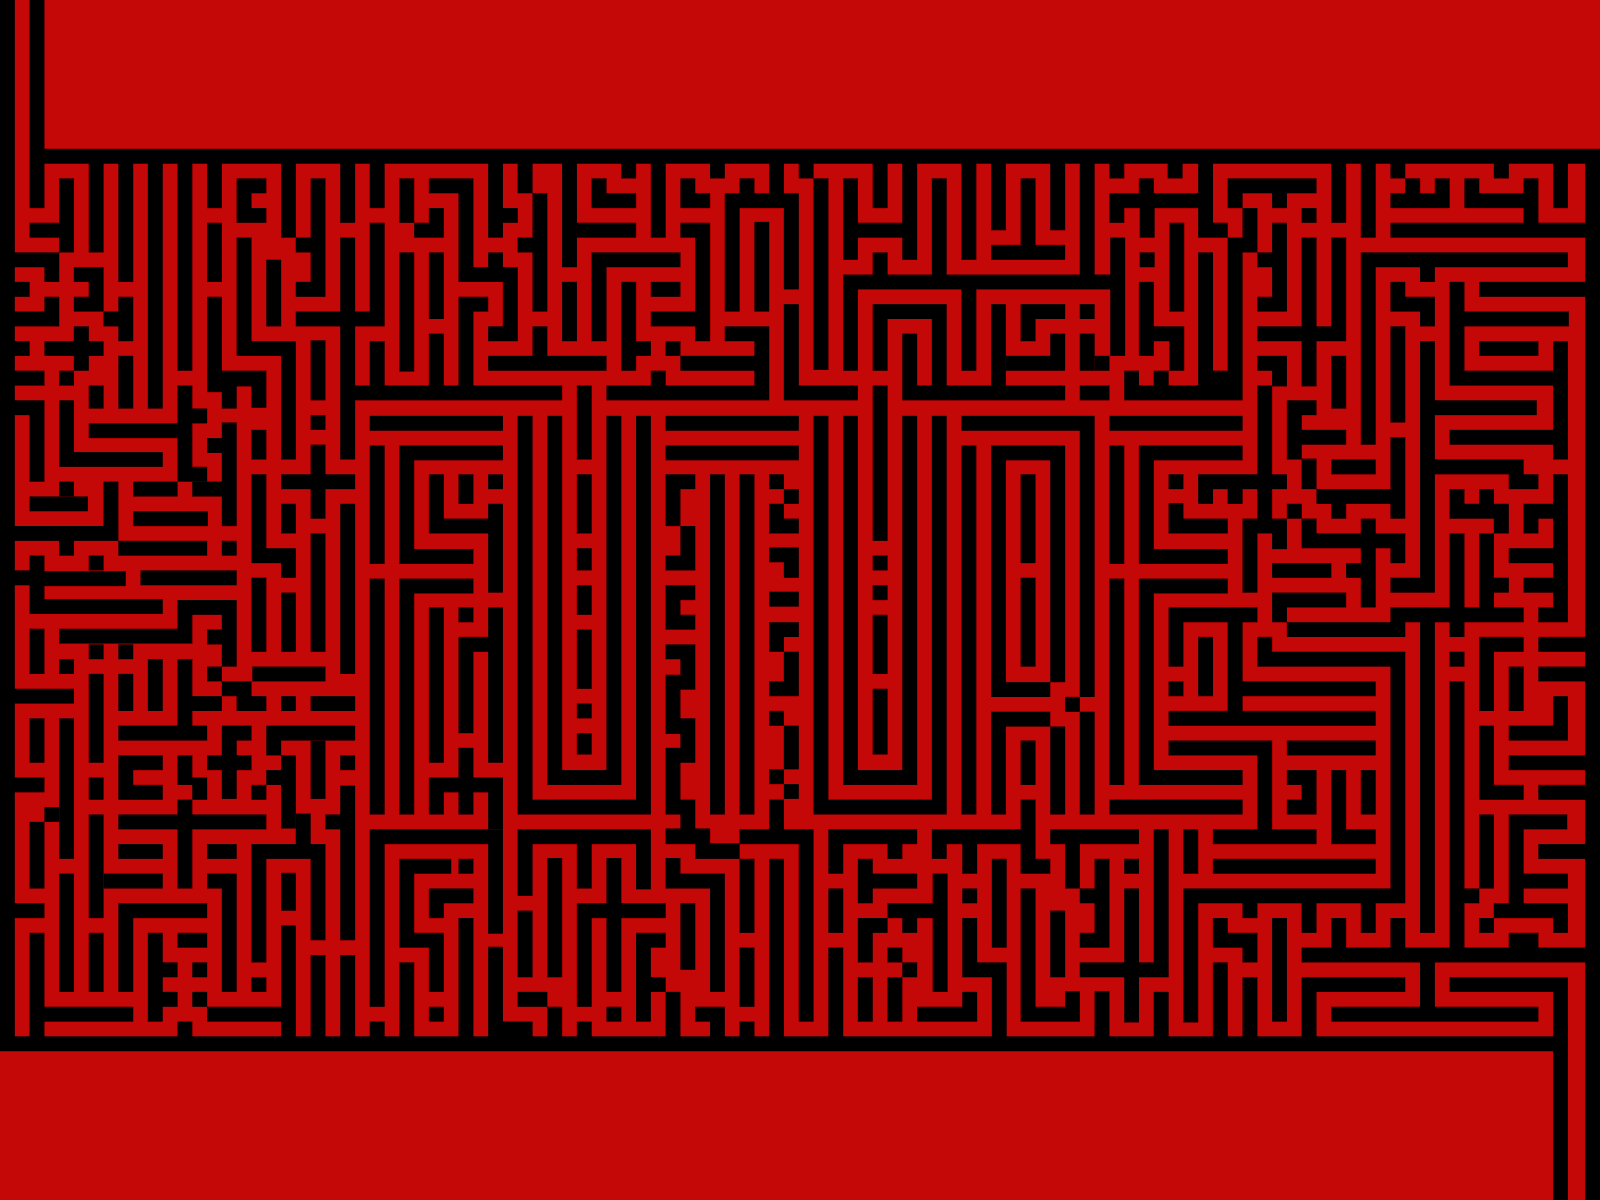 Future is complicated complicated covid-19 future lines maze